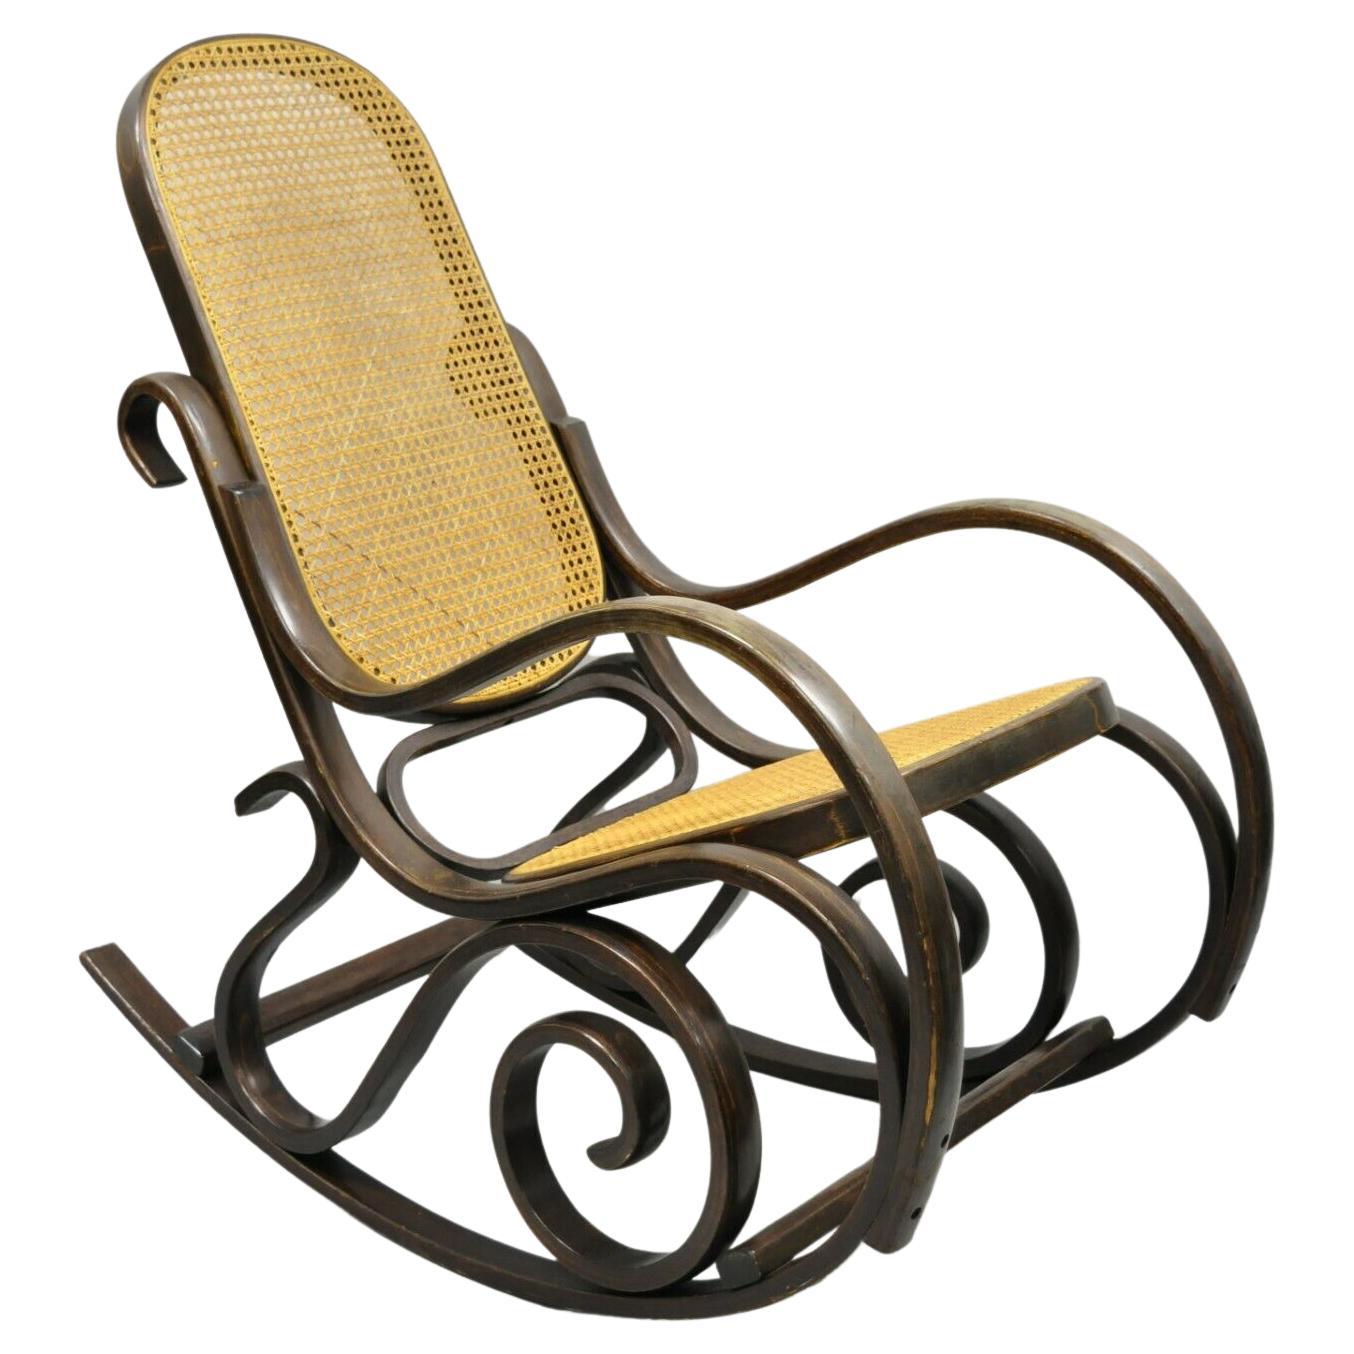 Antique Austrian Thonet Bentwood and Cane Rocker Rocking Chair